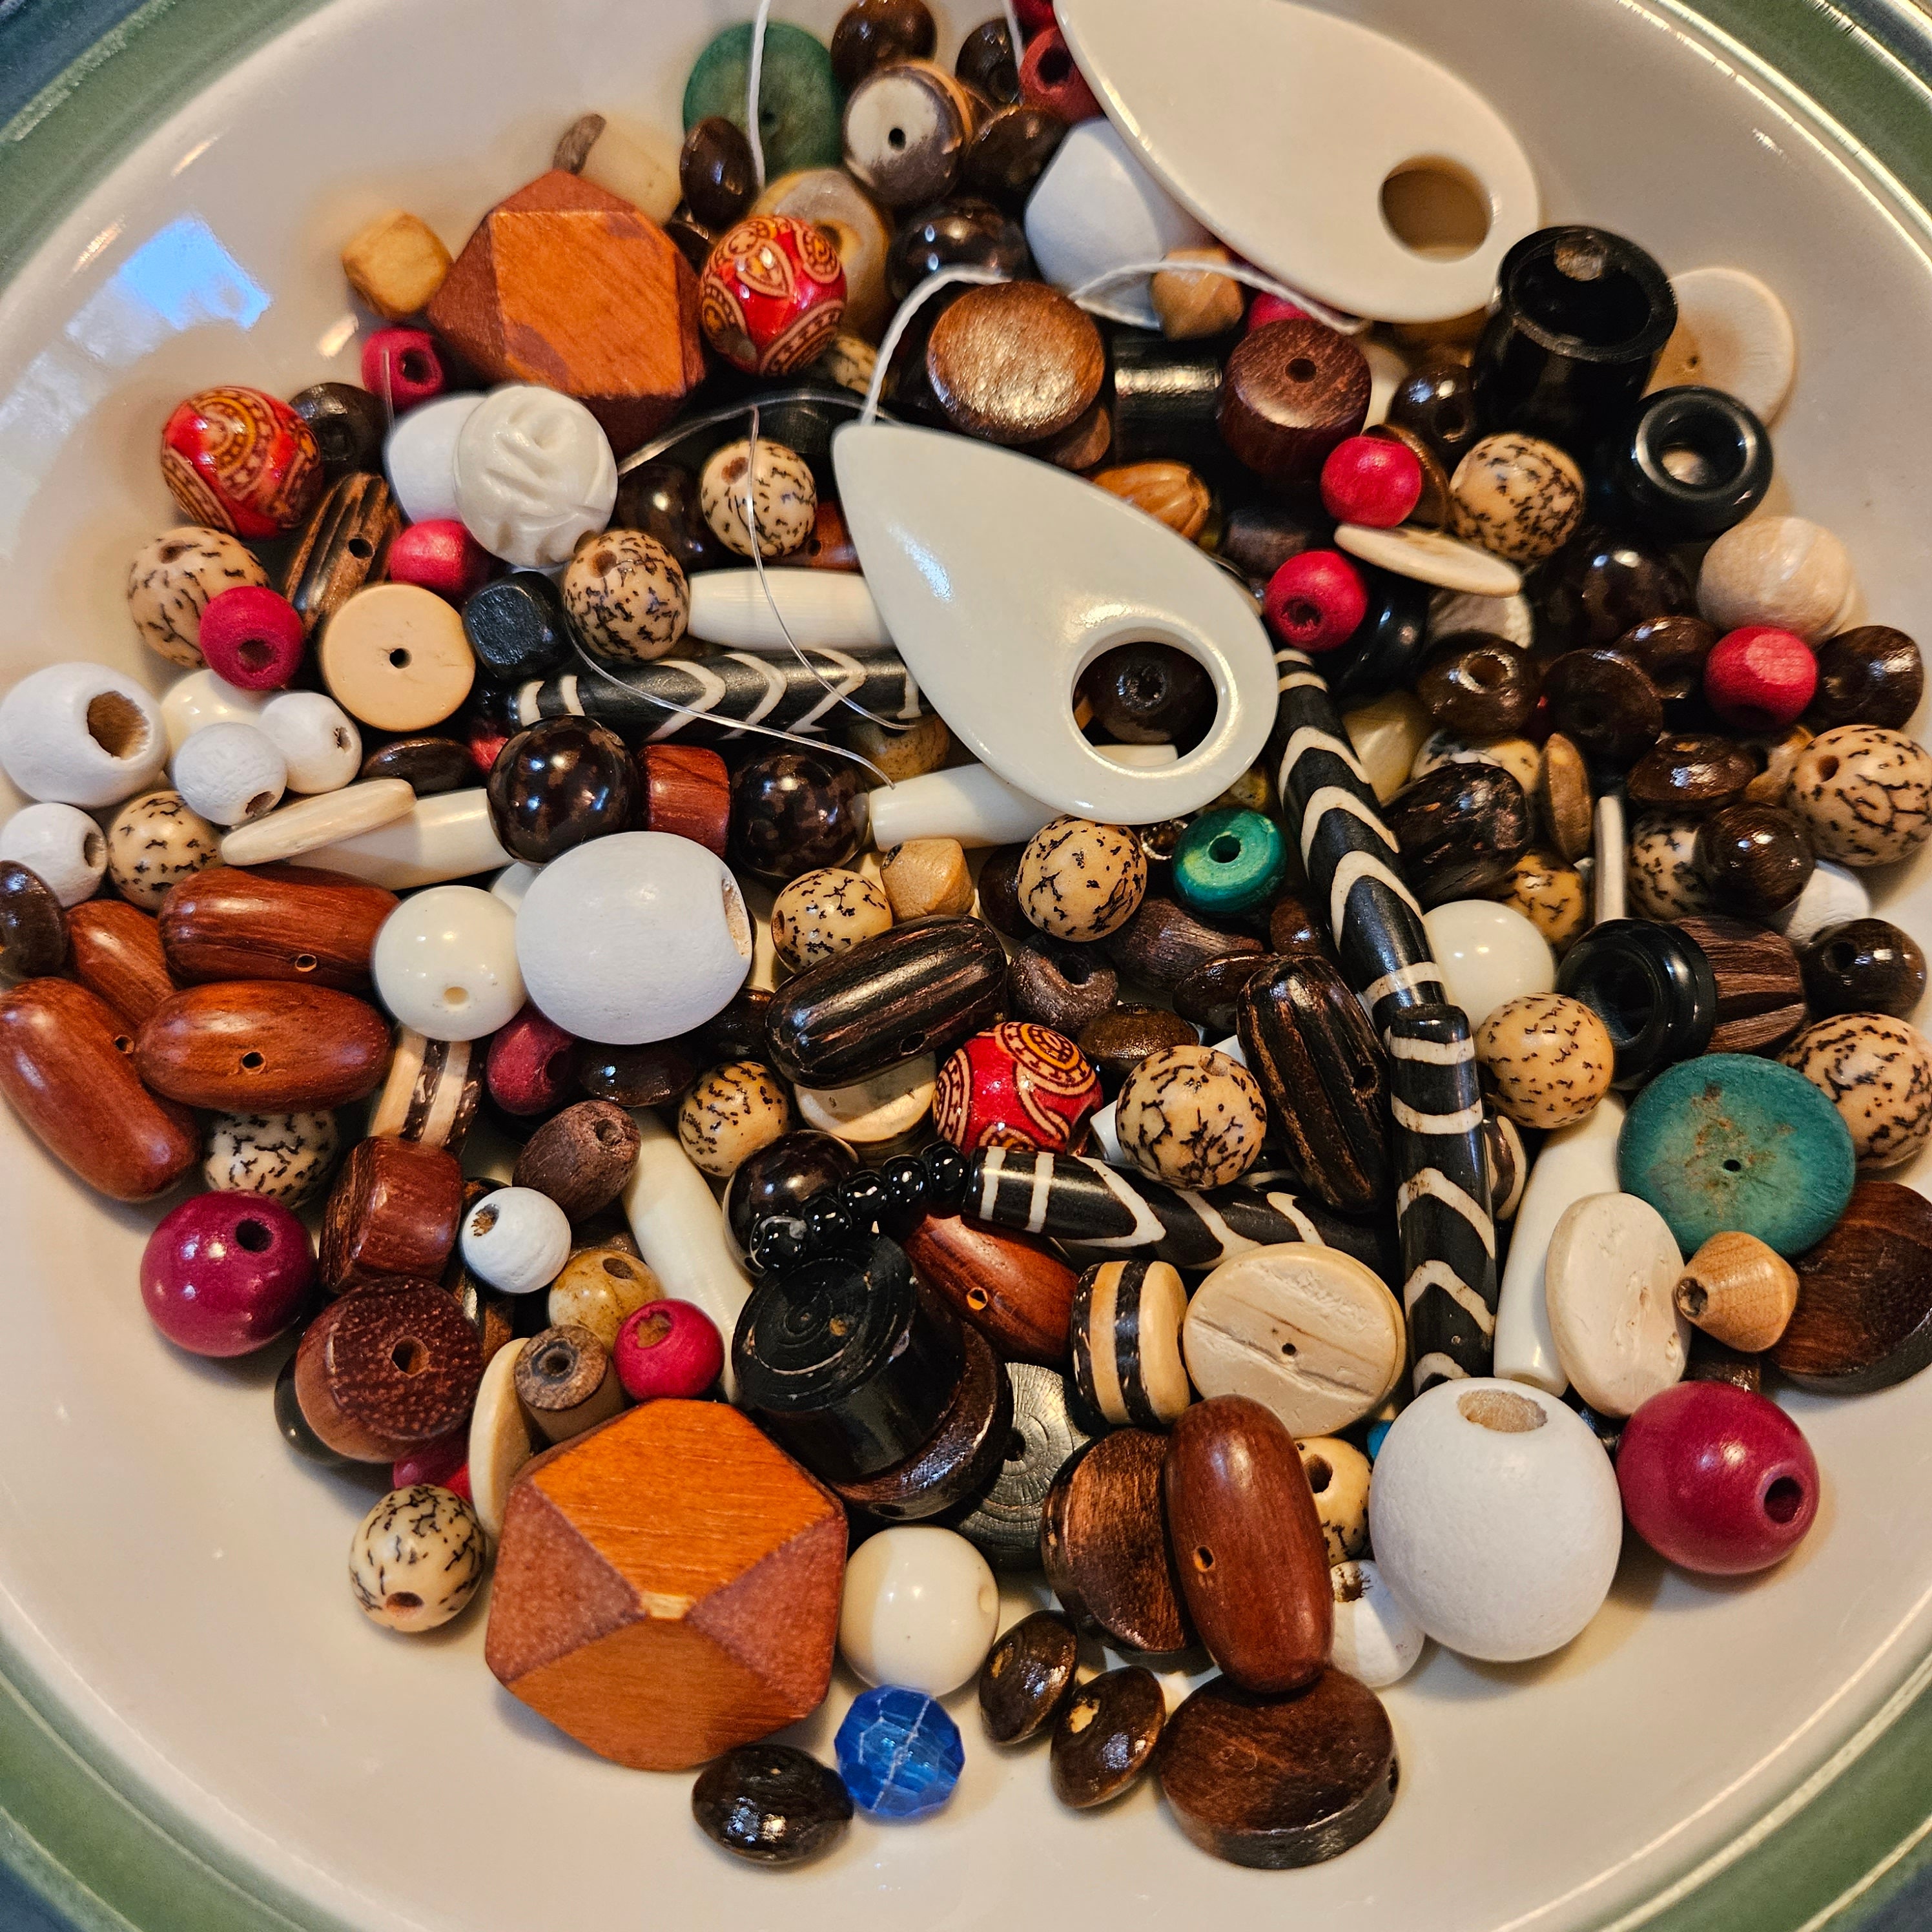 Wholesale Vintage-style Carved Bone Skull Beads Vintage Bone Beads  White-black-brown Bone Beads Meditation Beads 6-14mm 